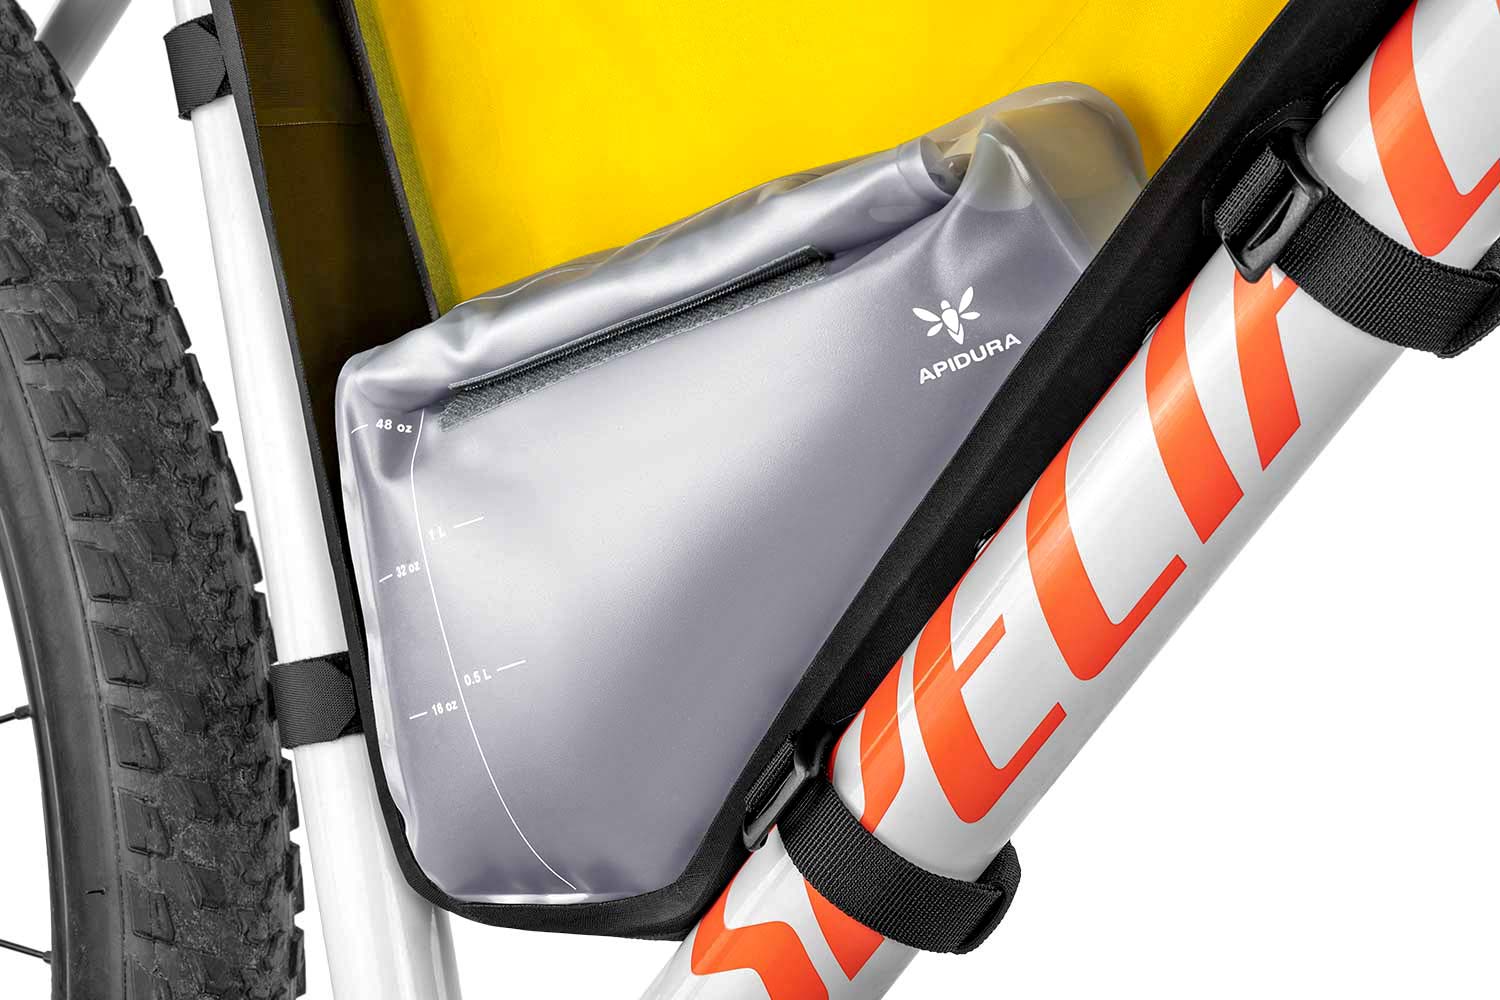 Apidura 1.5L frame Pack Hydration Bladder, Innovation Lab bikepacking frame pack water bag, inside cutaway